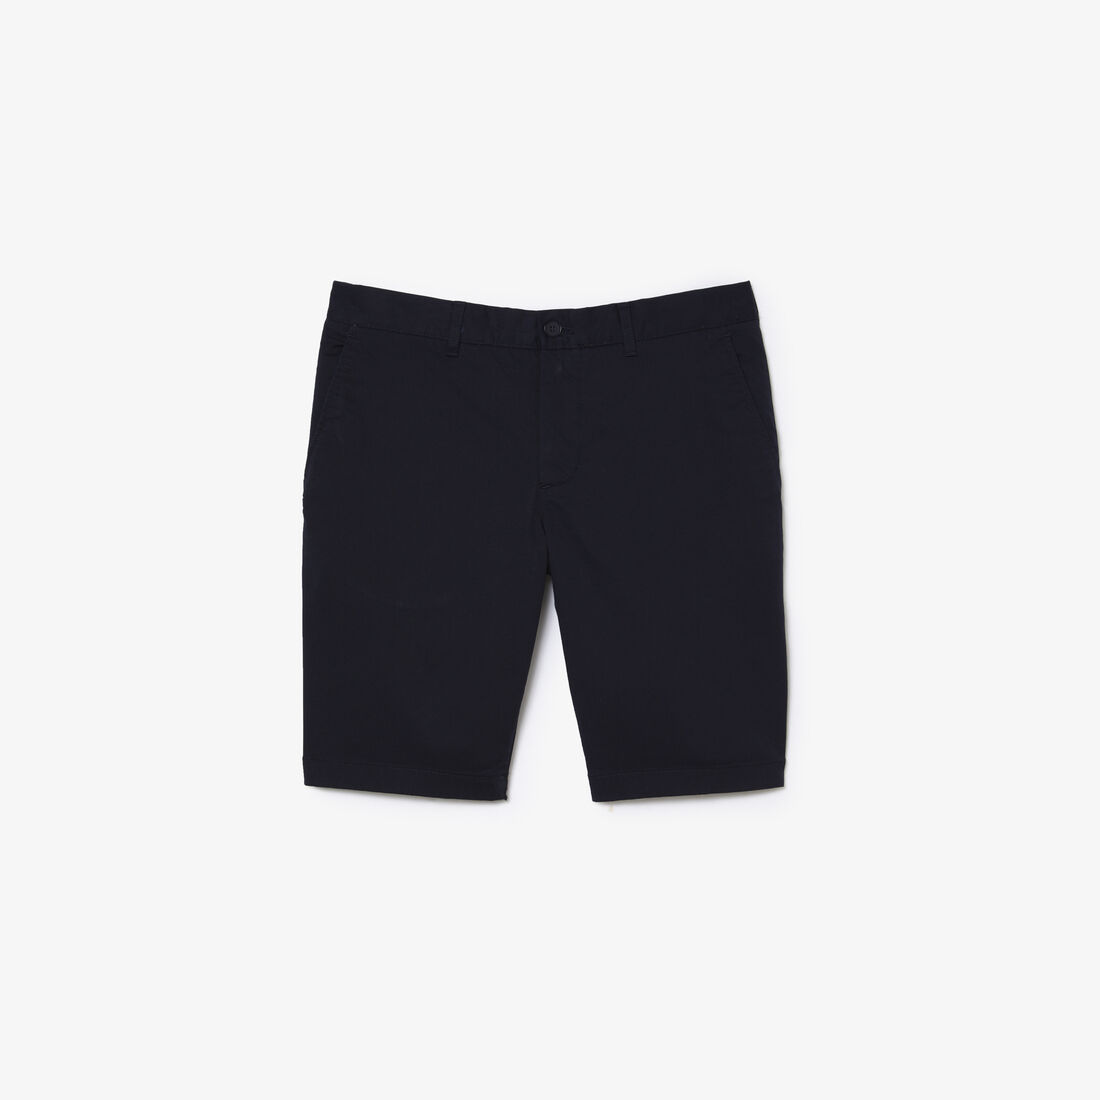 Lacoste Lacoste Men's Slim Fit Stretch Cotton Bermuda Shorts